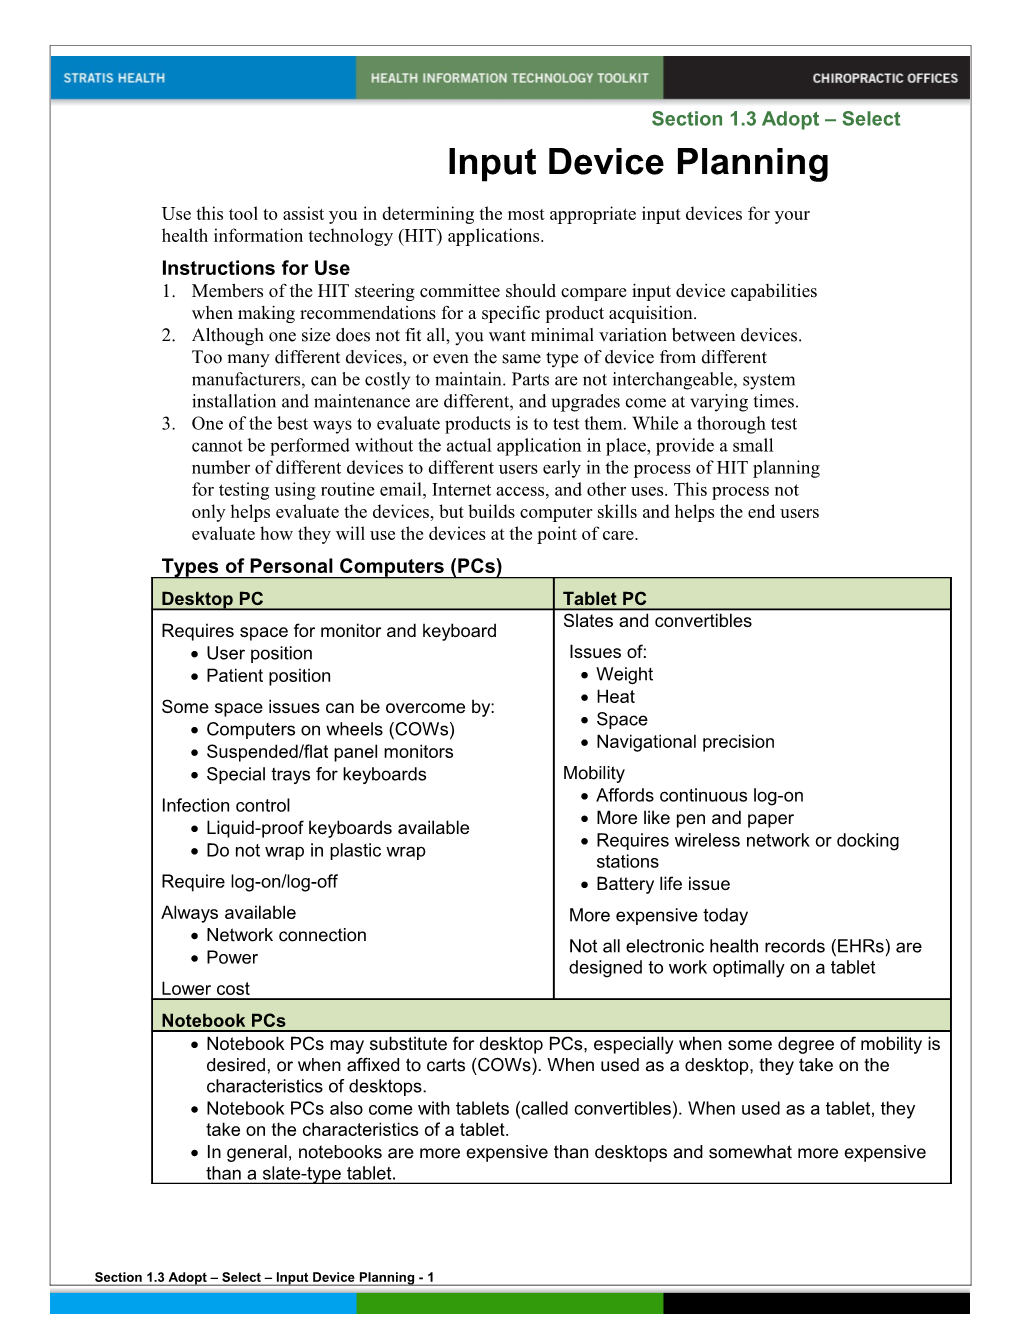 1.3 Input Device Planning